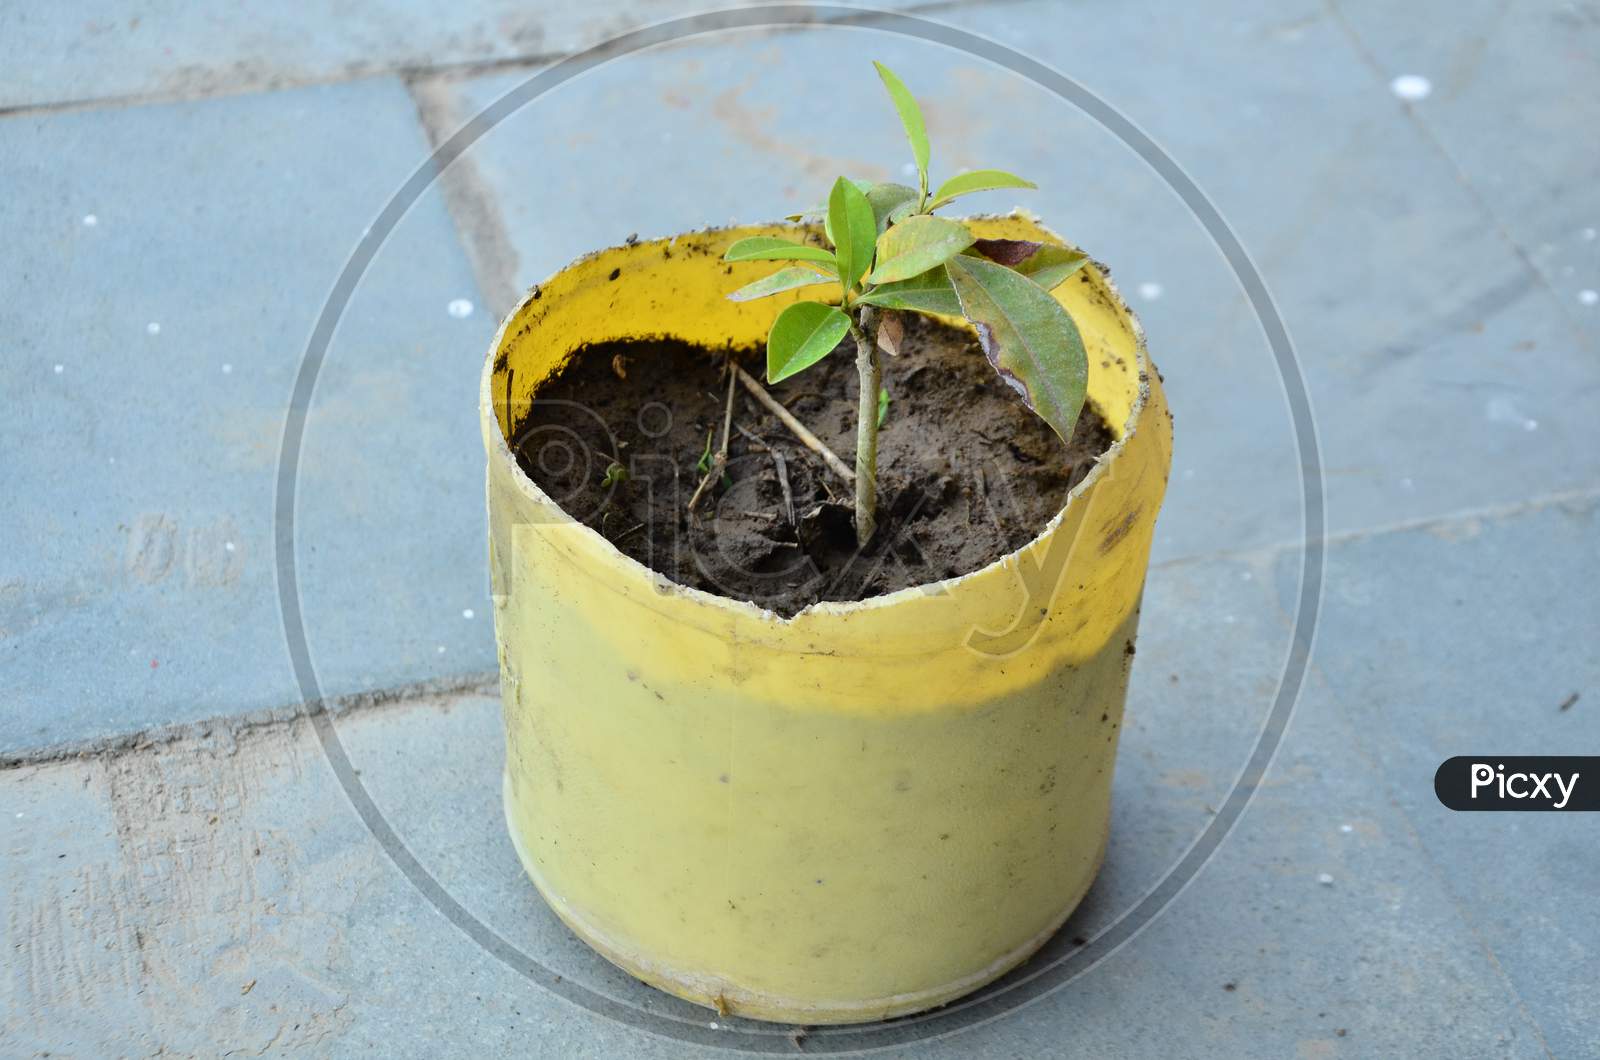 Plant in Pot at Home Garden in Nadaun Town  Himachal Pradesh India